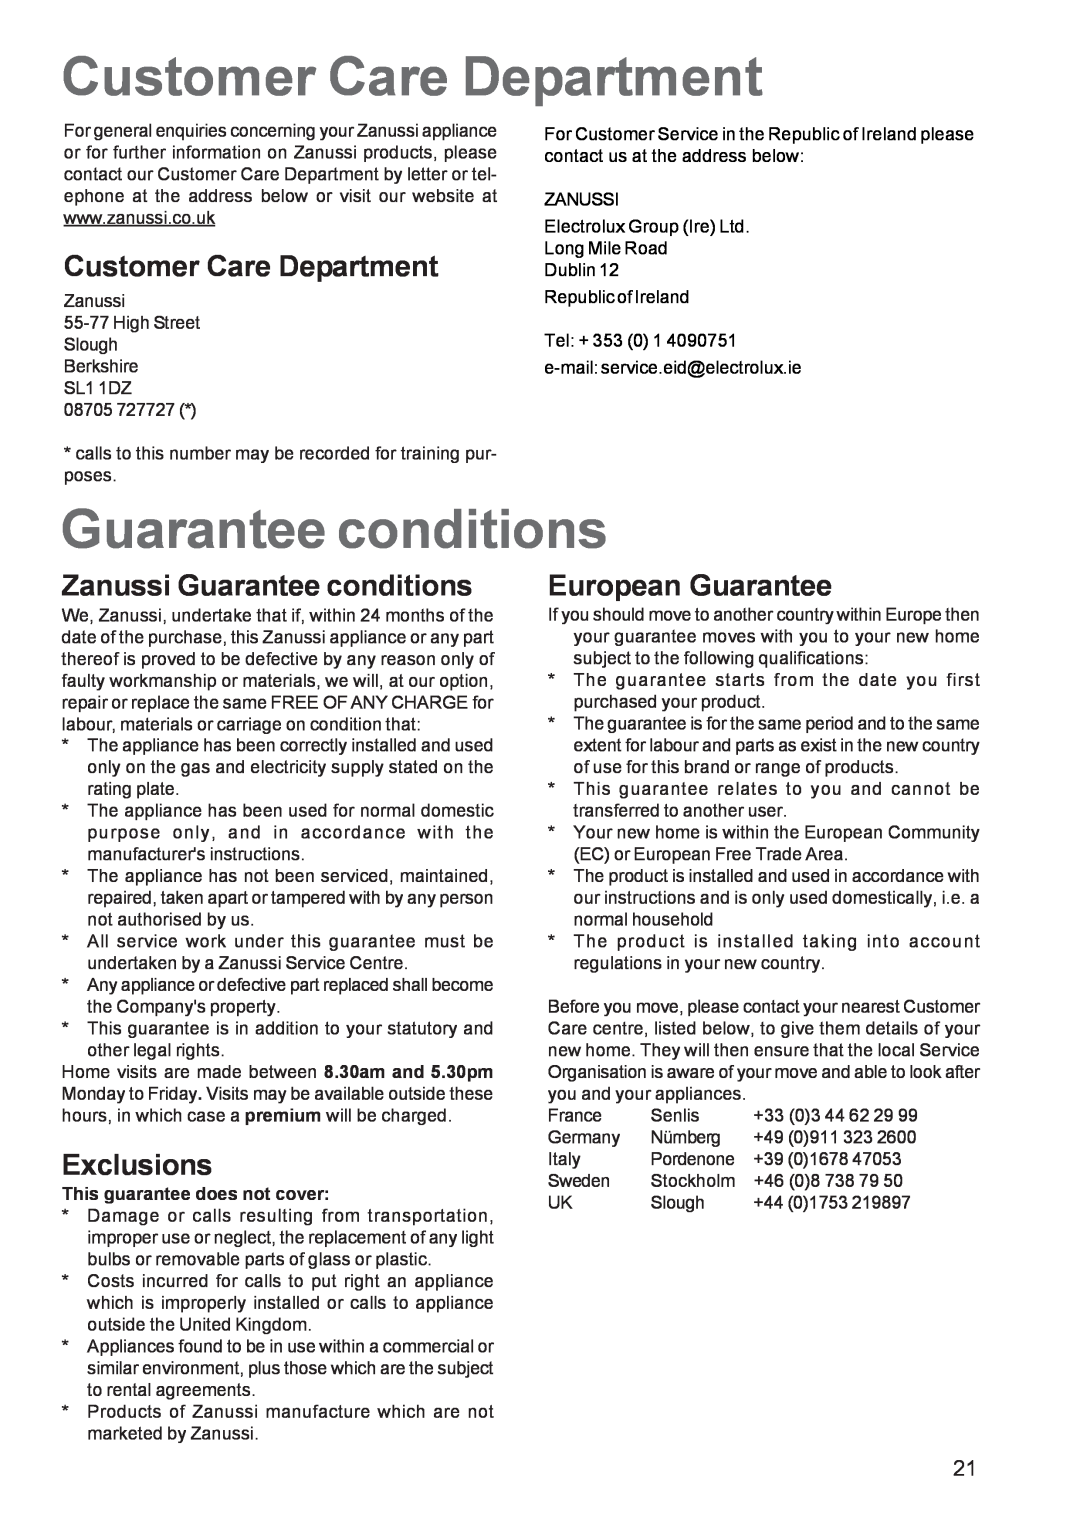 Zanussi ZBS 963 manual Customer Care Department, Zanussi Guarantee conditions, Exclusions, European Guarantee 